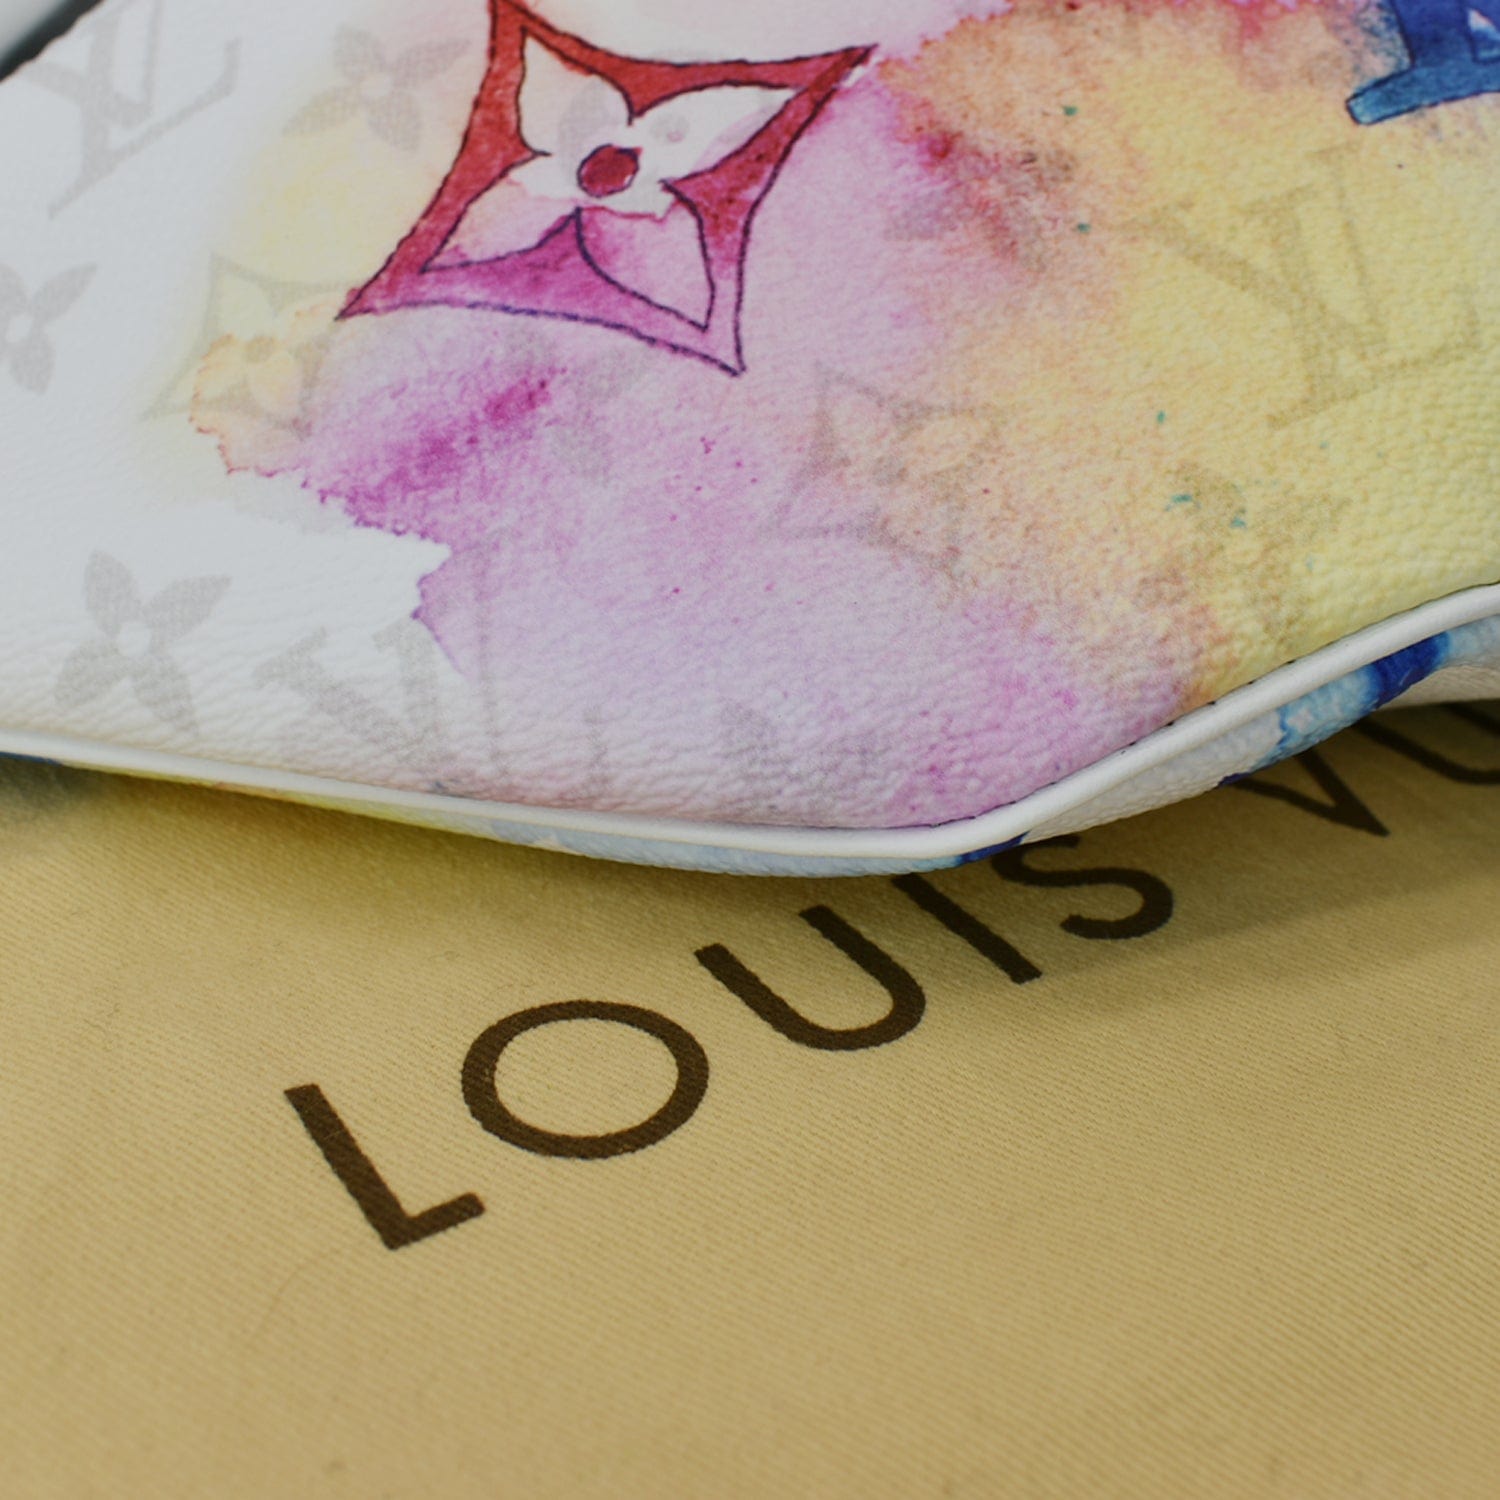 Louis Vuitton Pochette Voyage Monogram Watercolor Multicolor